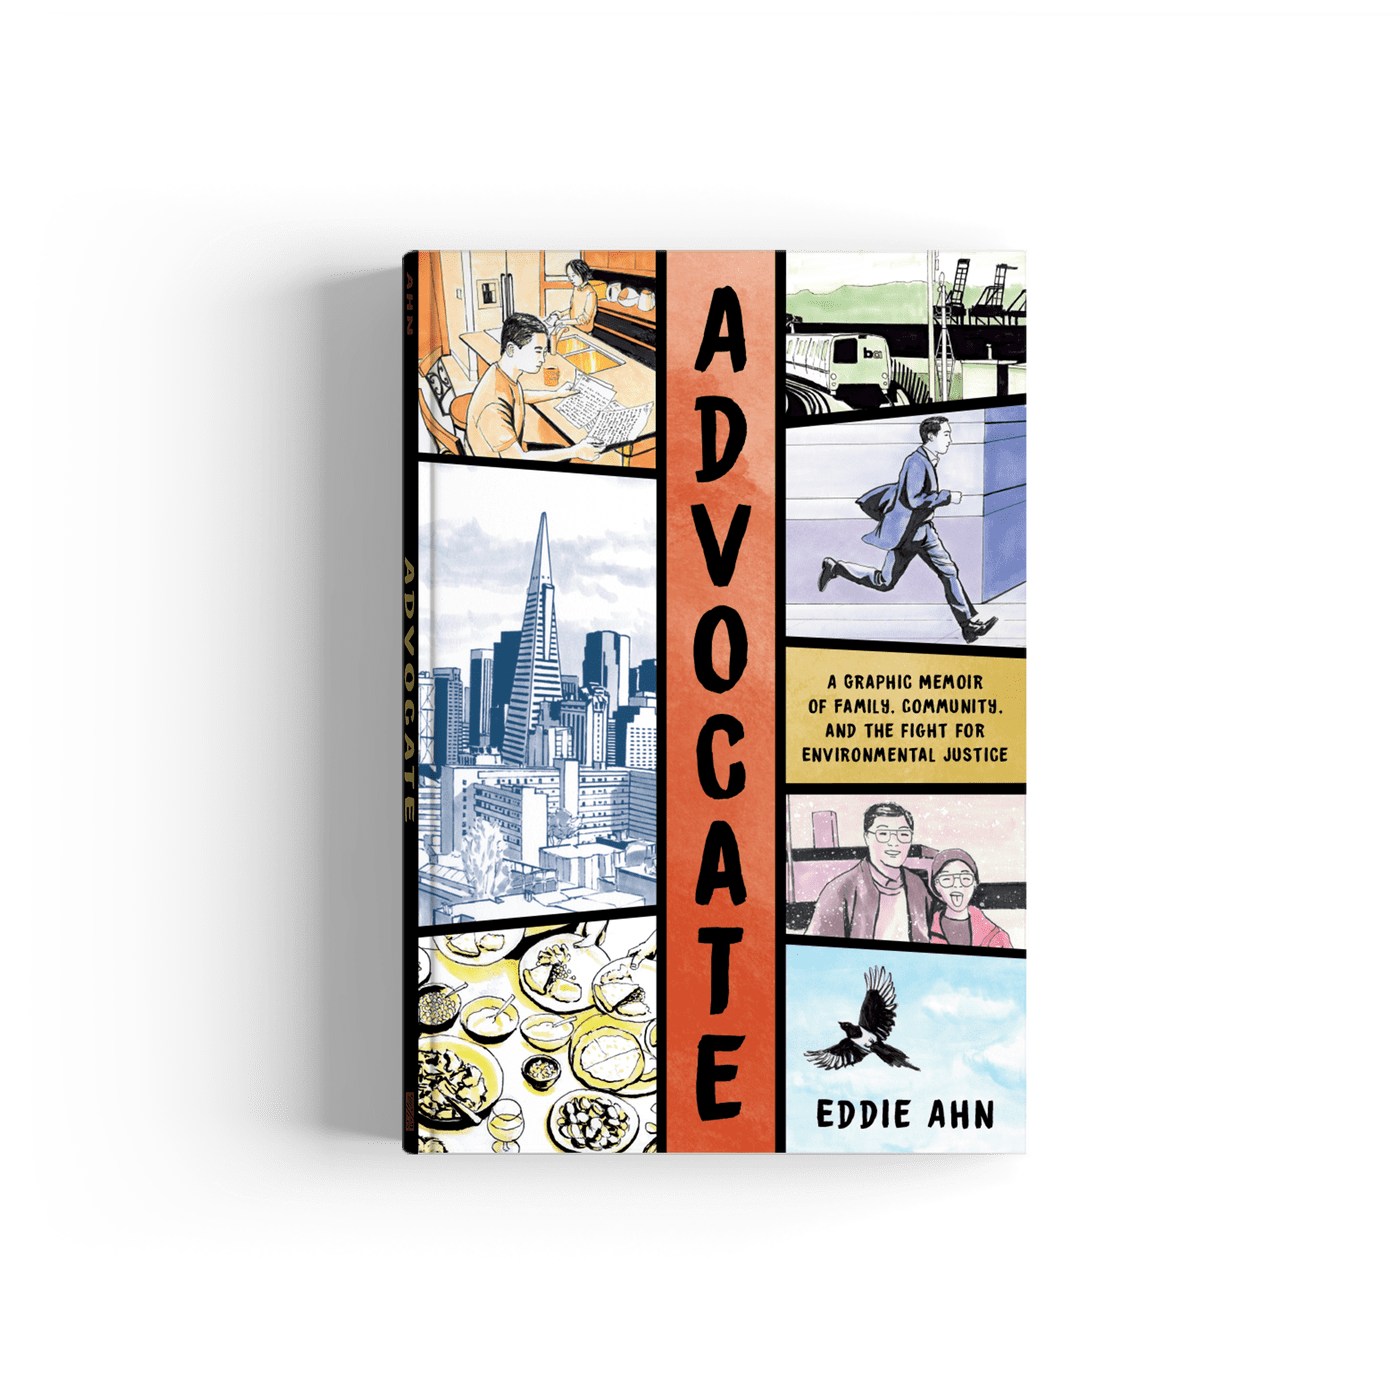 A Graphic Memoir About an Environmental Advocate